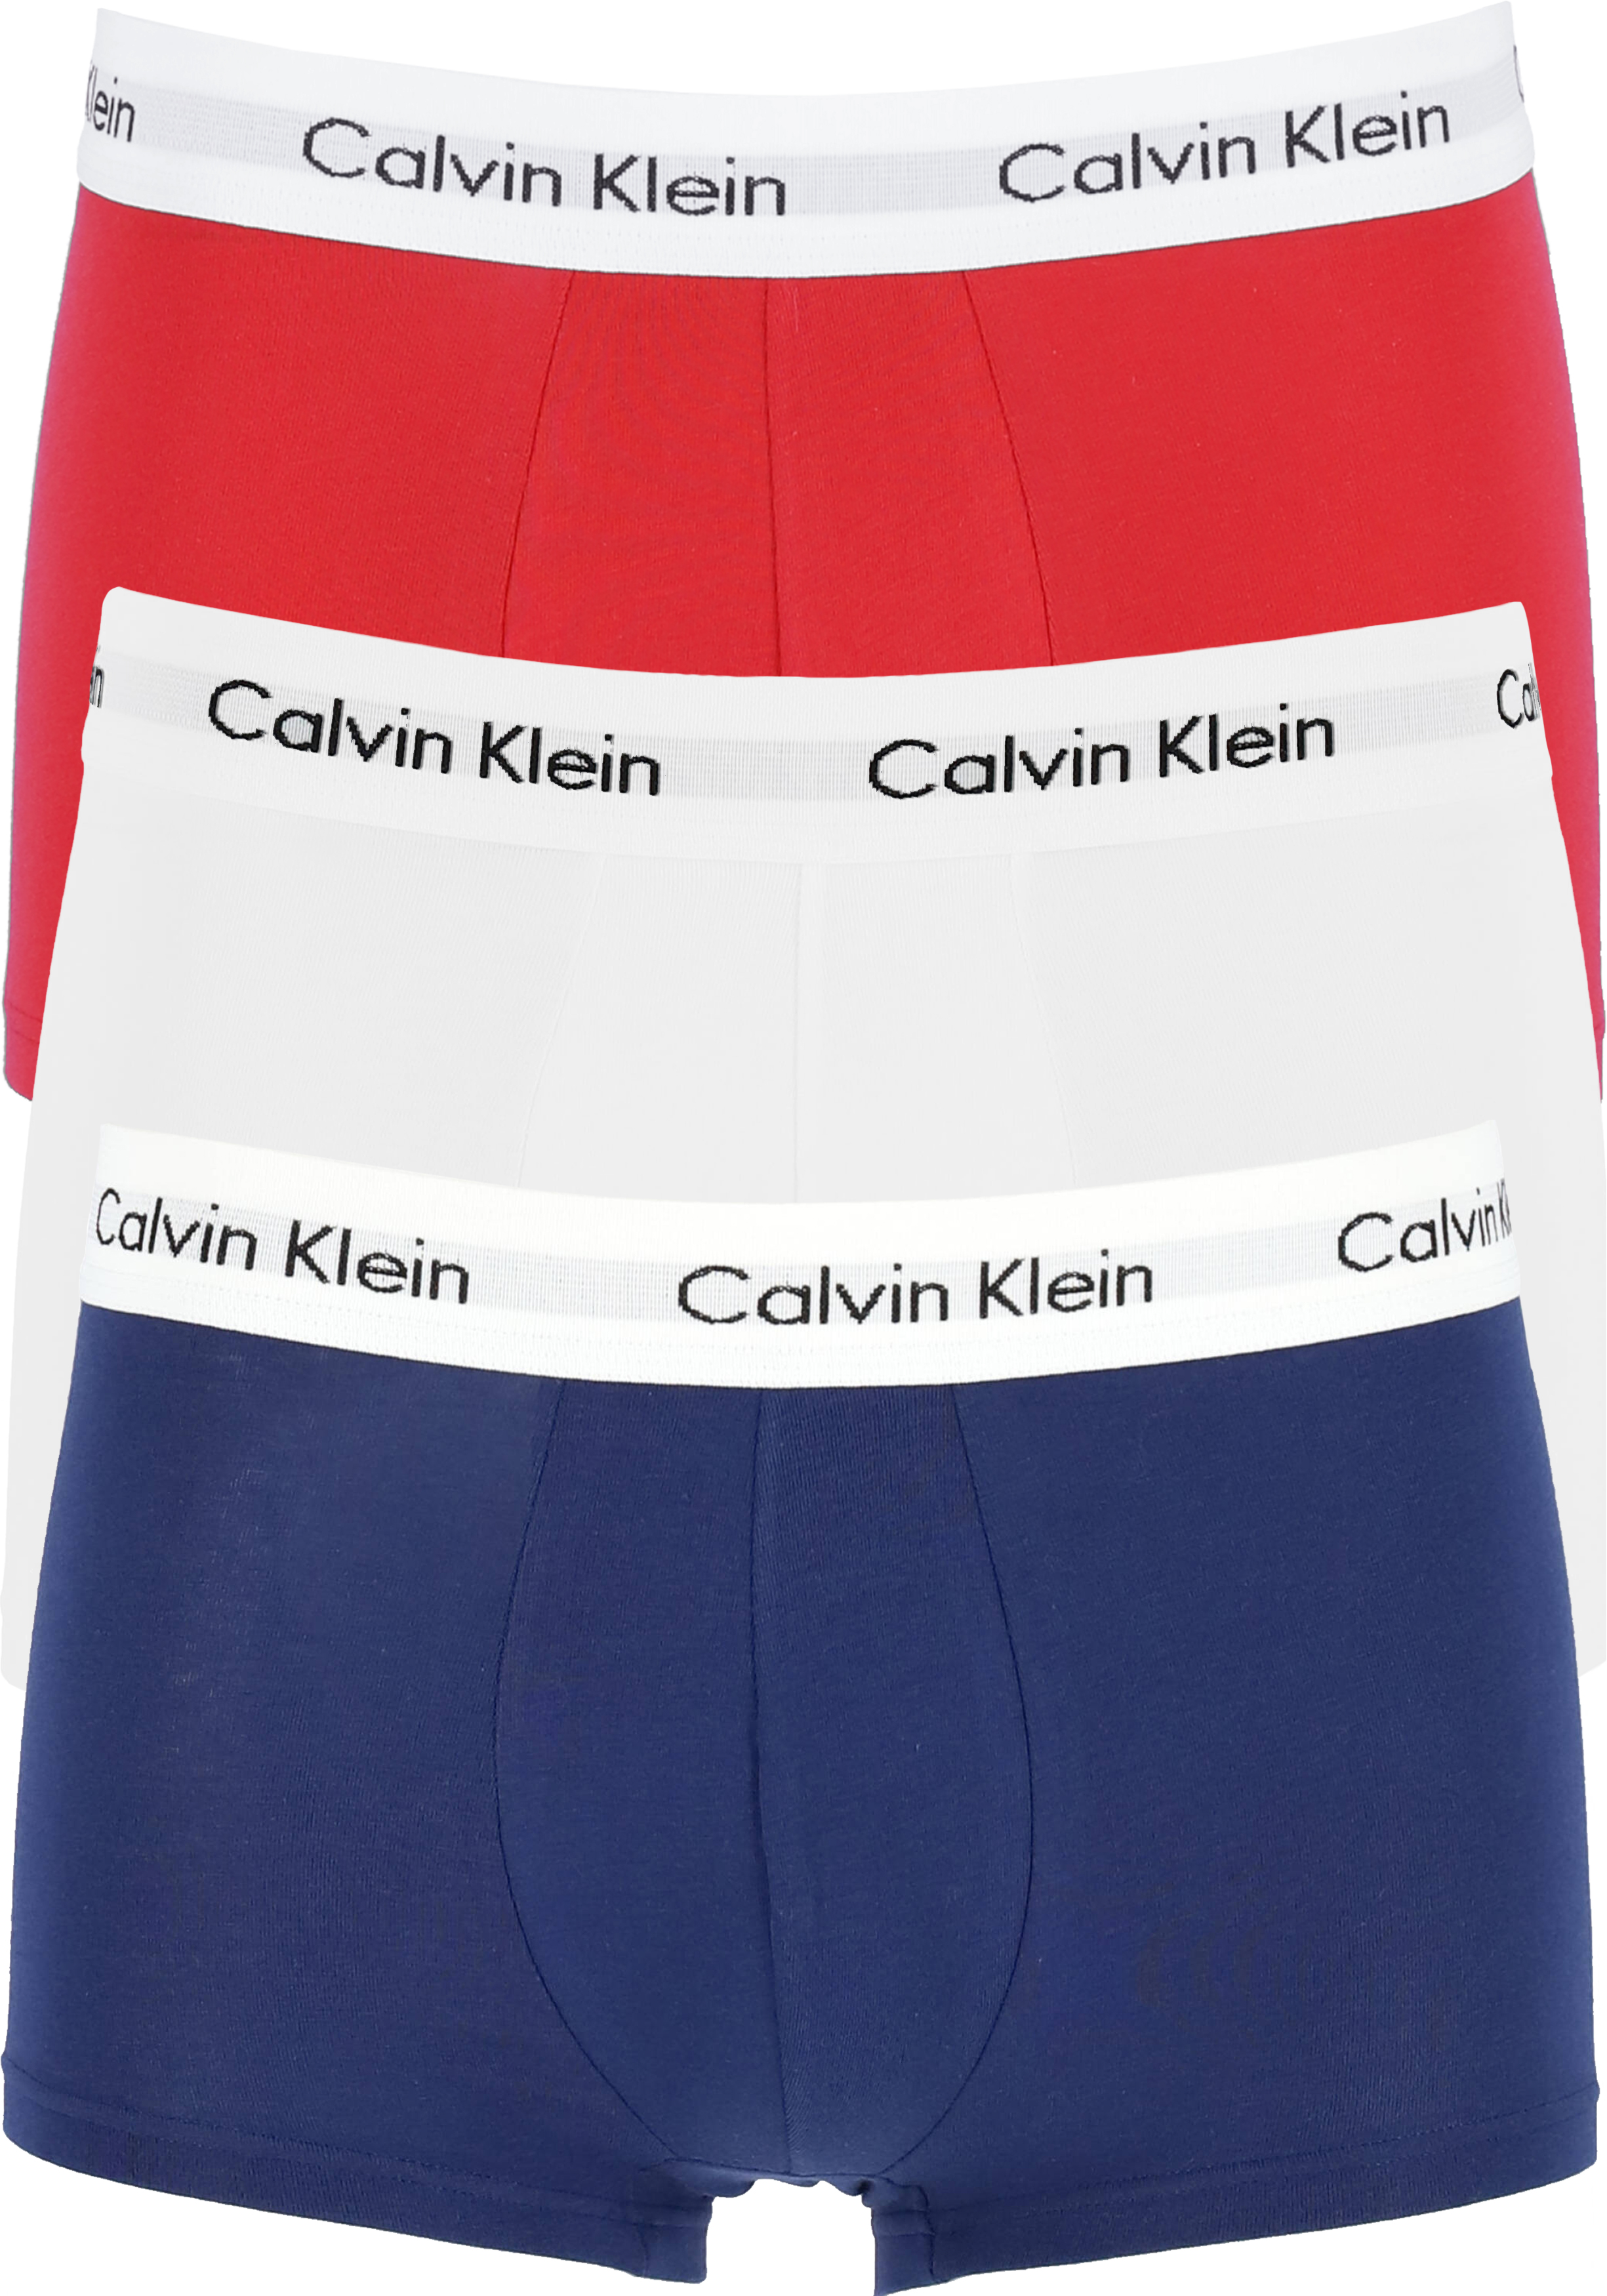 Calvin Klein Low Rise Trunks rood - wit en blauw - bezorgd